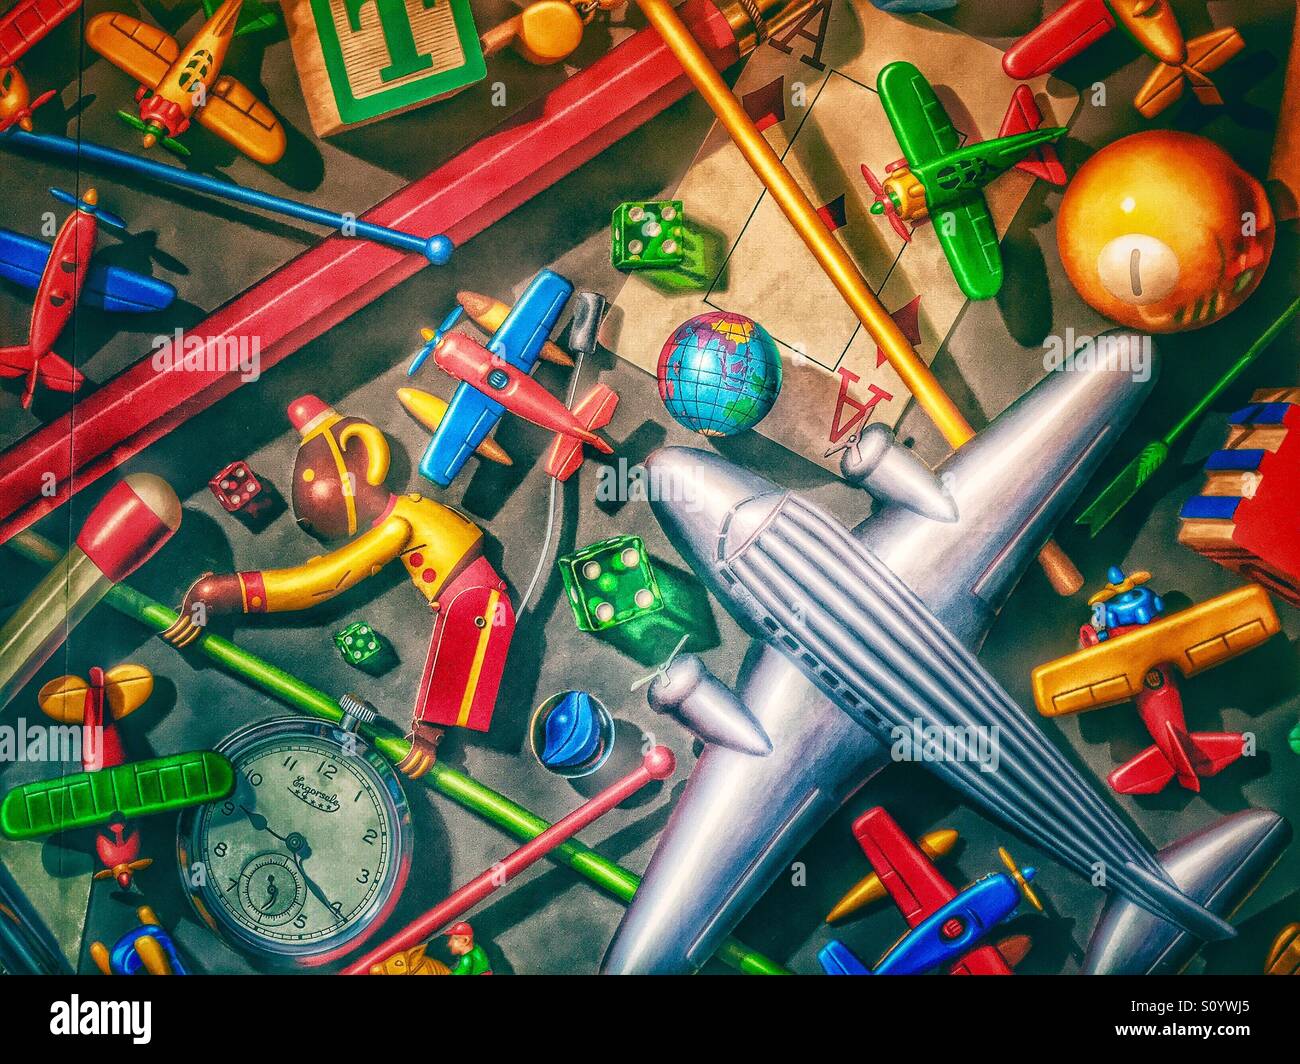 Child's world of toys Stock Photo